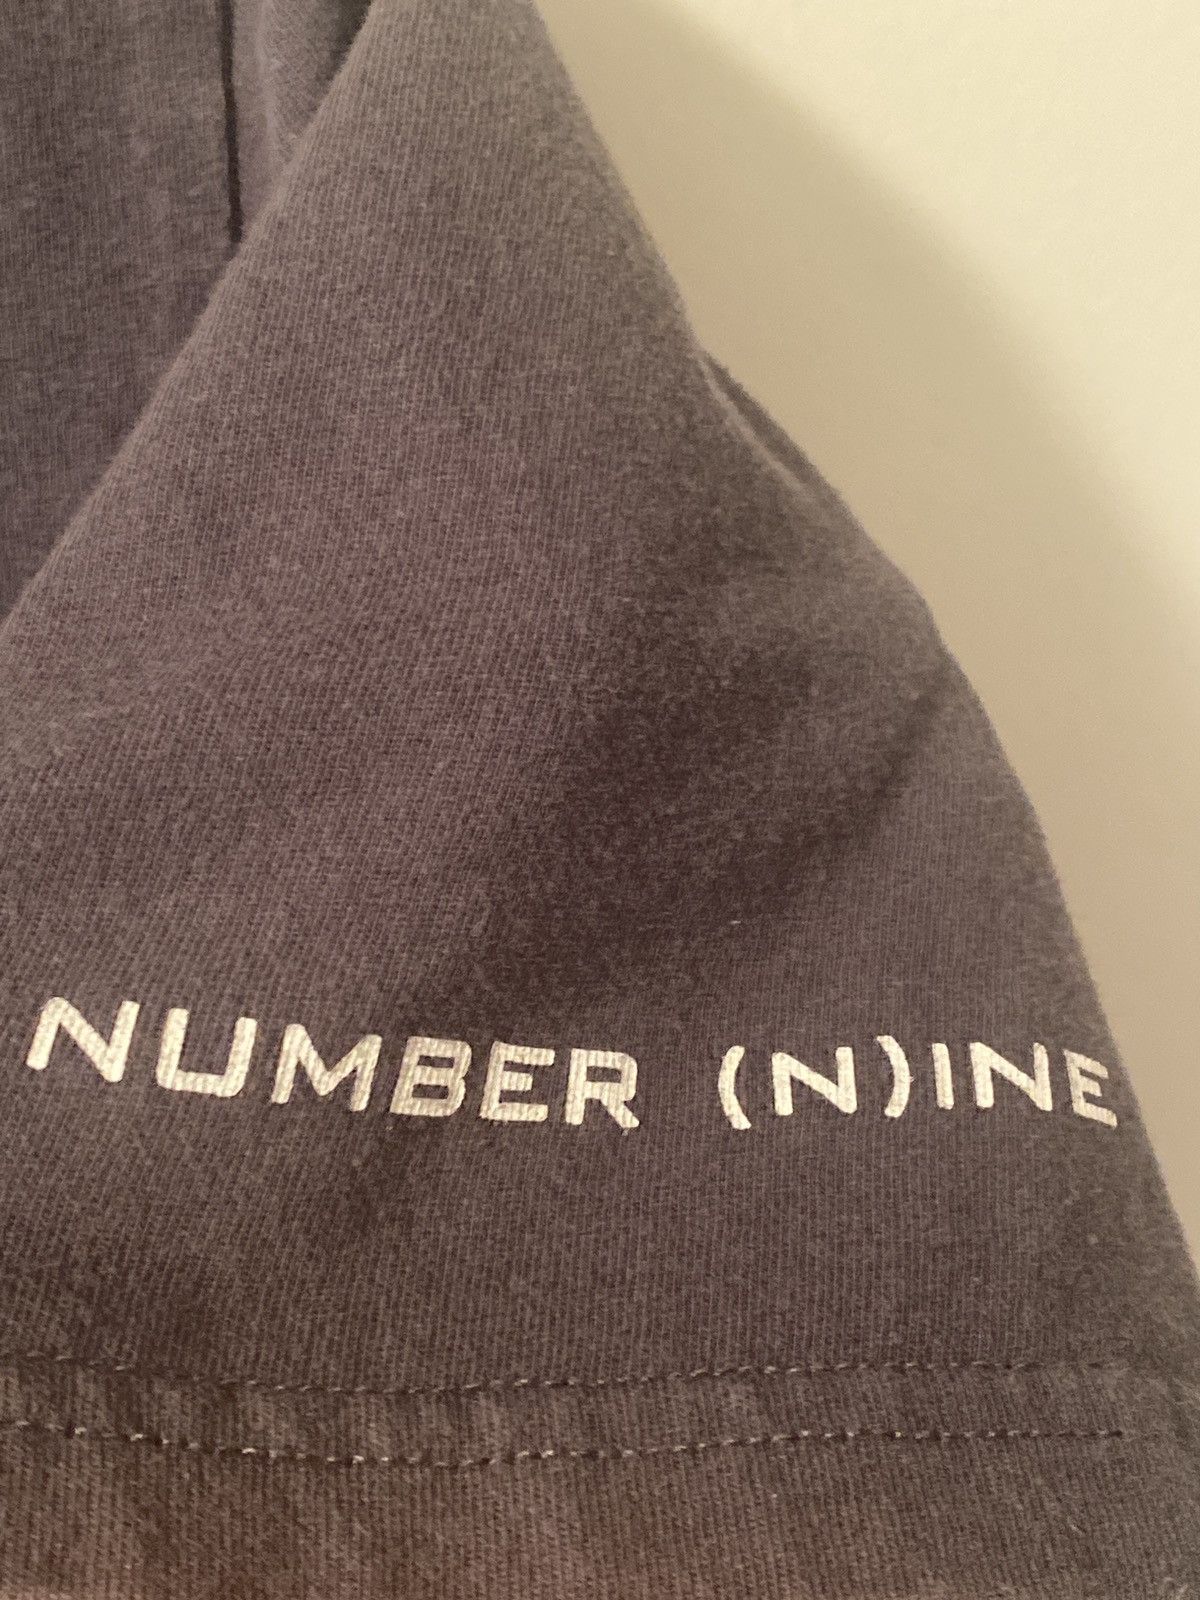 Number (N)ine Number (N)ine x Marlboro Collab T-Shirt Size US M / EU 48-50 / 2 - 3 Thumbnail